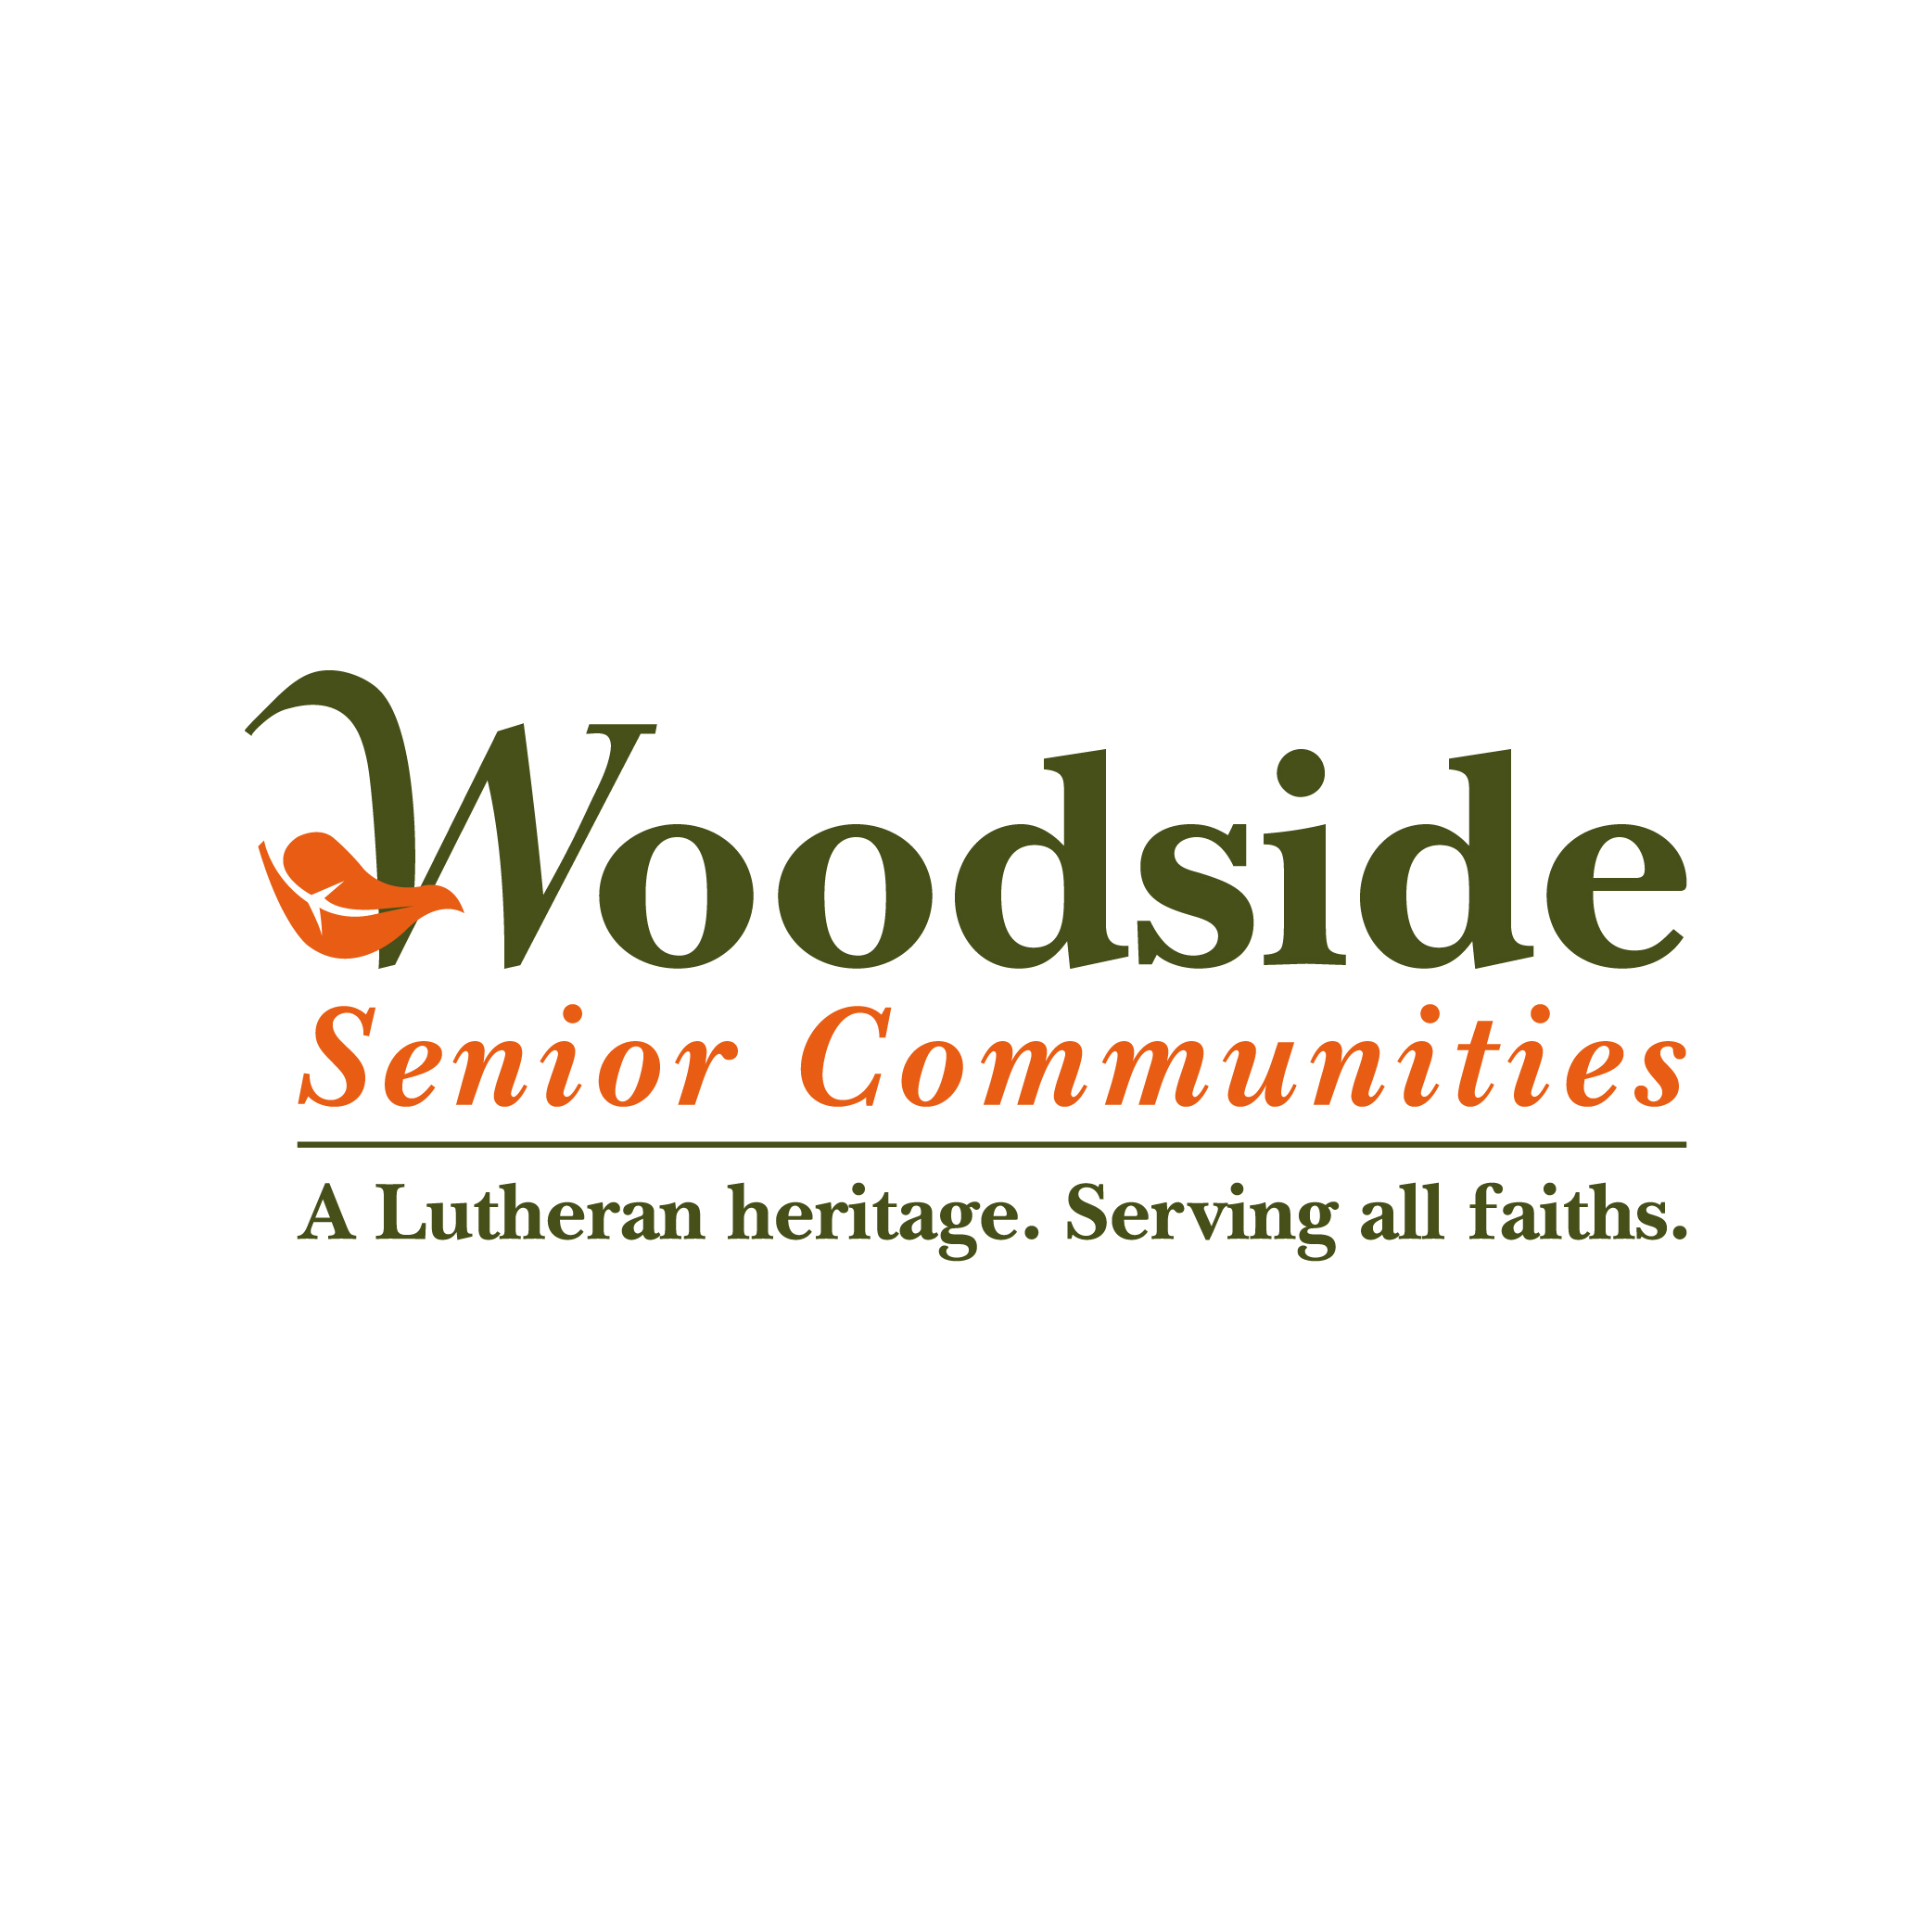 Woodside Manor - Woodside Senior Communities - Northeast WI